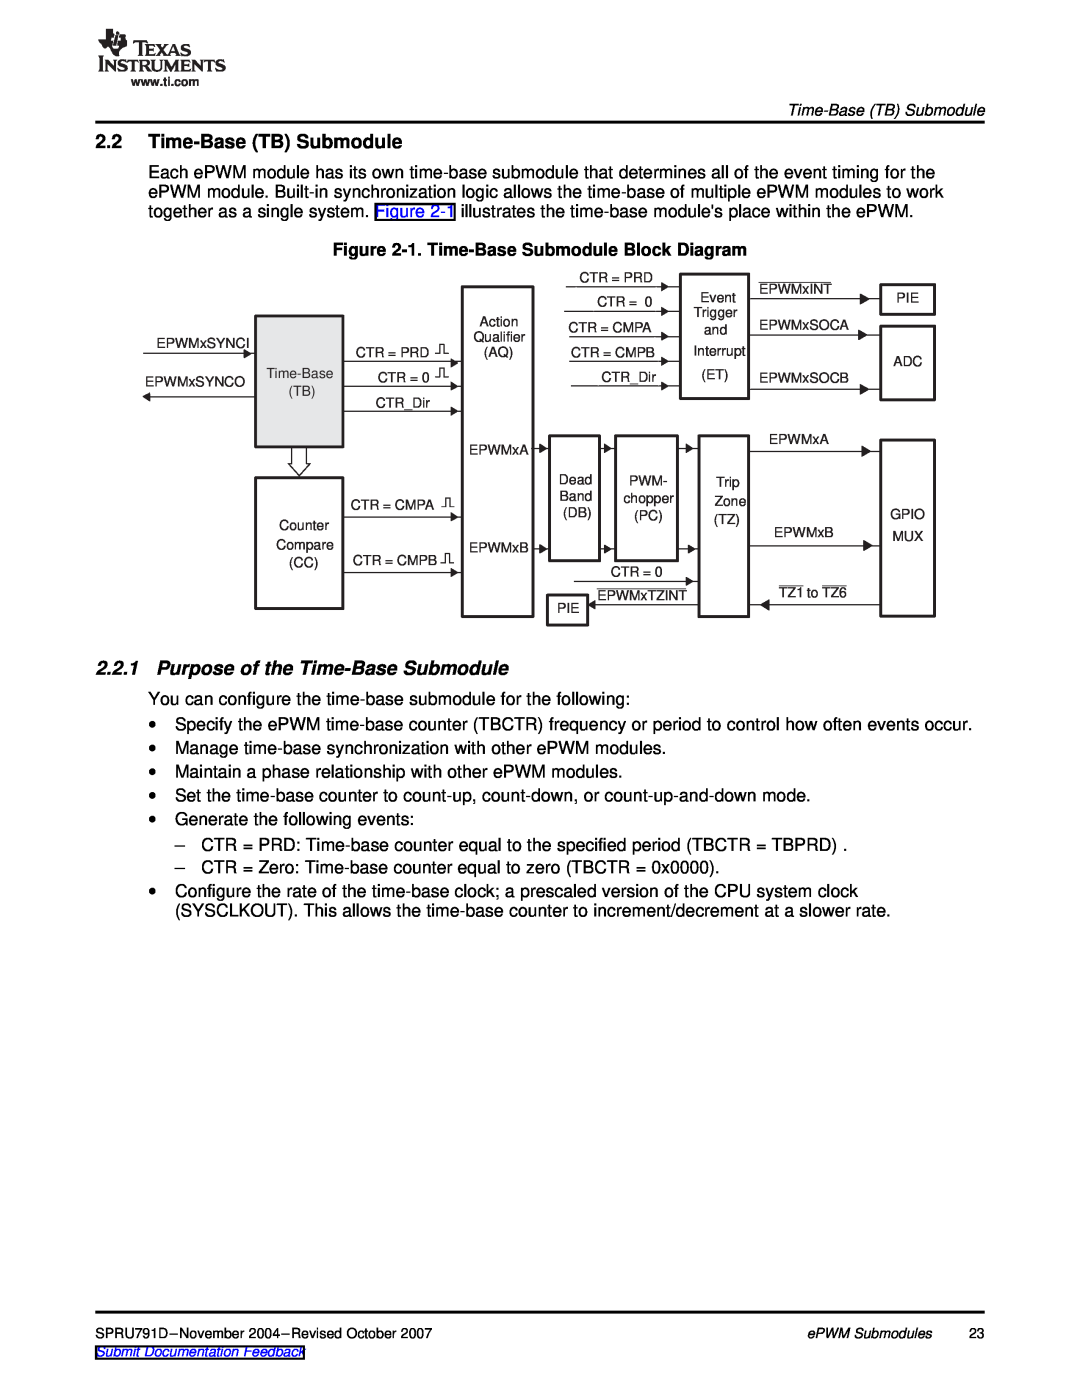 Texas Instruments 28xxx Time-Base TB Submodule, Purpose of the Time-Base Submodule, 1. Time-Base Submodule Block Diagram 